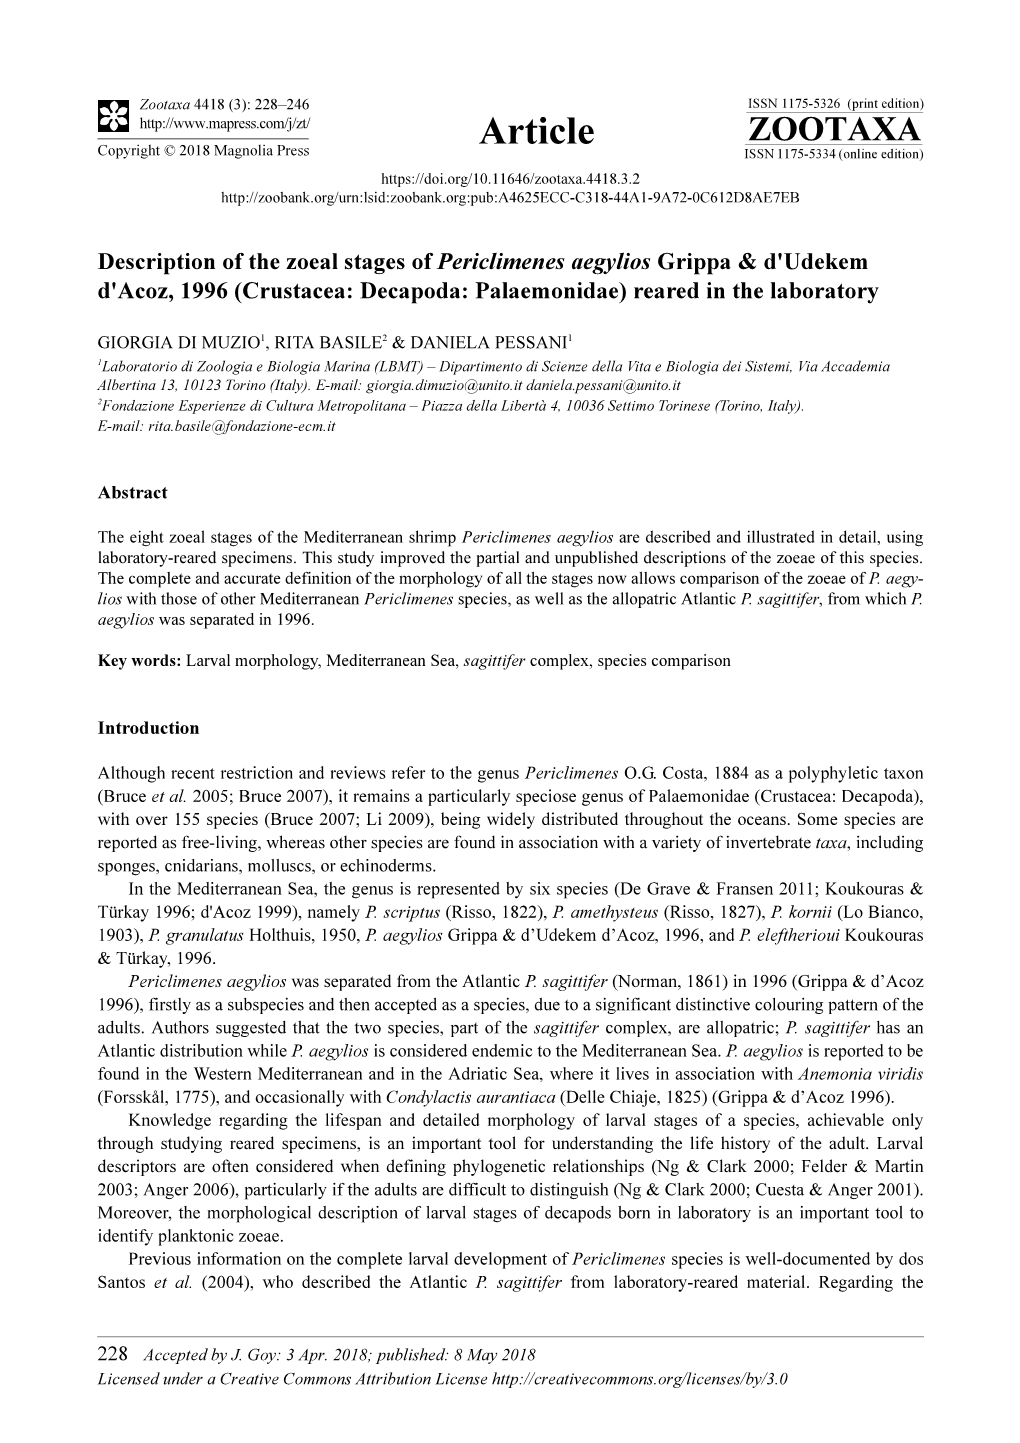 Description of the Zoeal Stages of Periclimenes Aegylios Grippa & D'udekem D'acoz, 1996 (Crustacea: Decapoda: Palaem